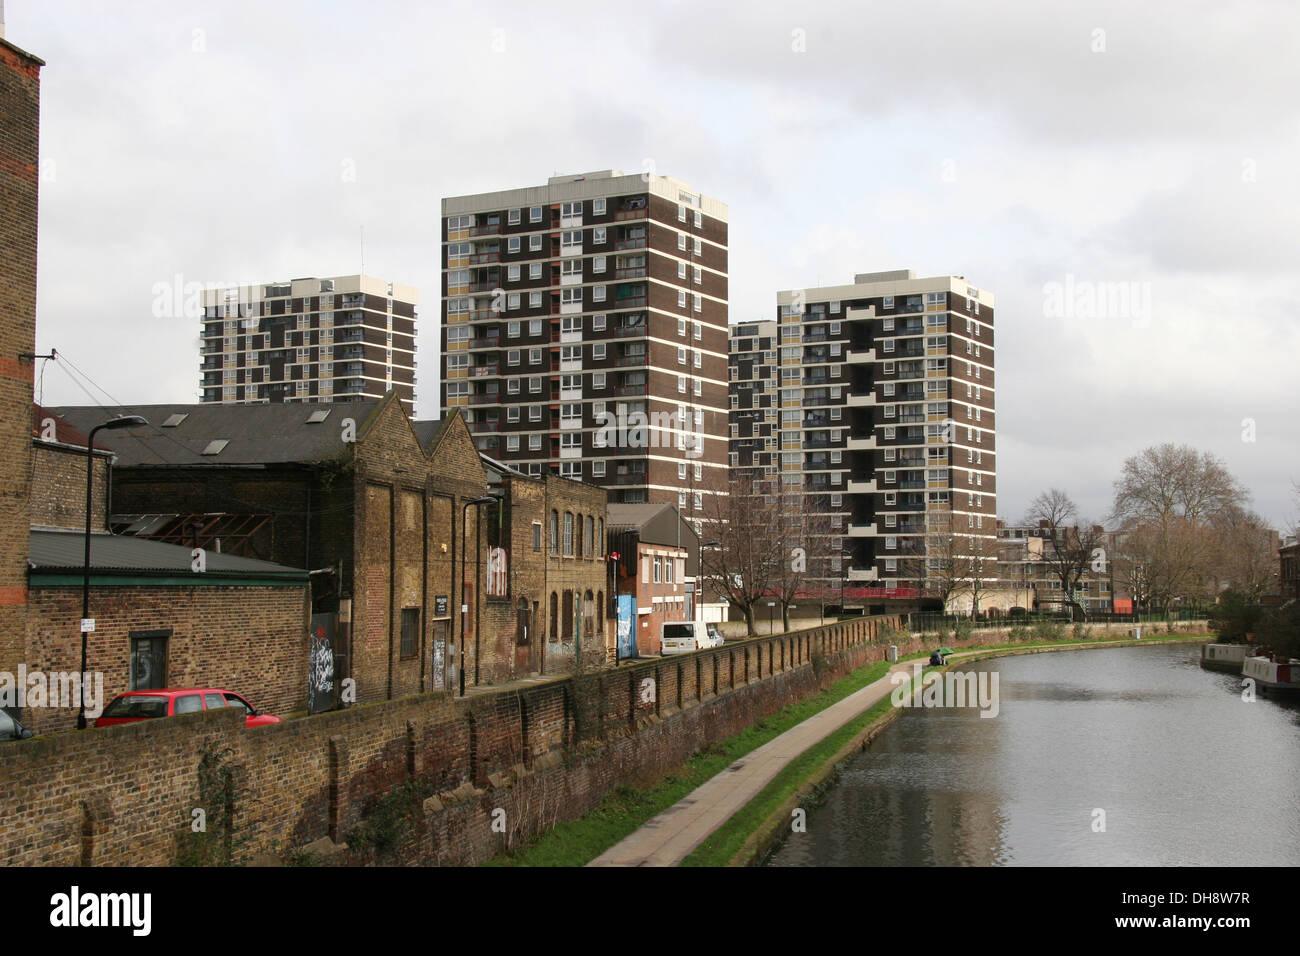 council-flats-in-islington-london-n1-uk-